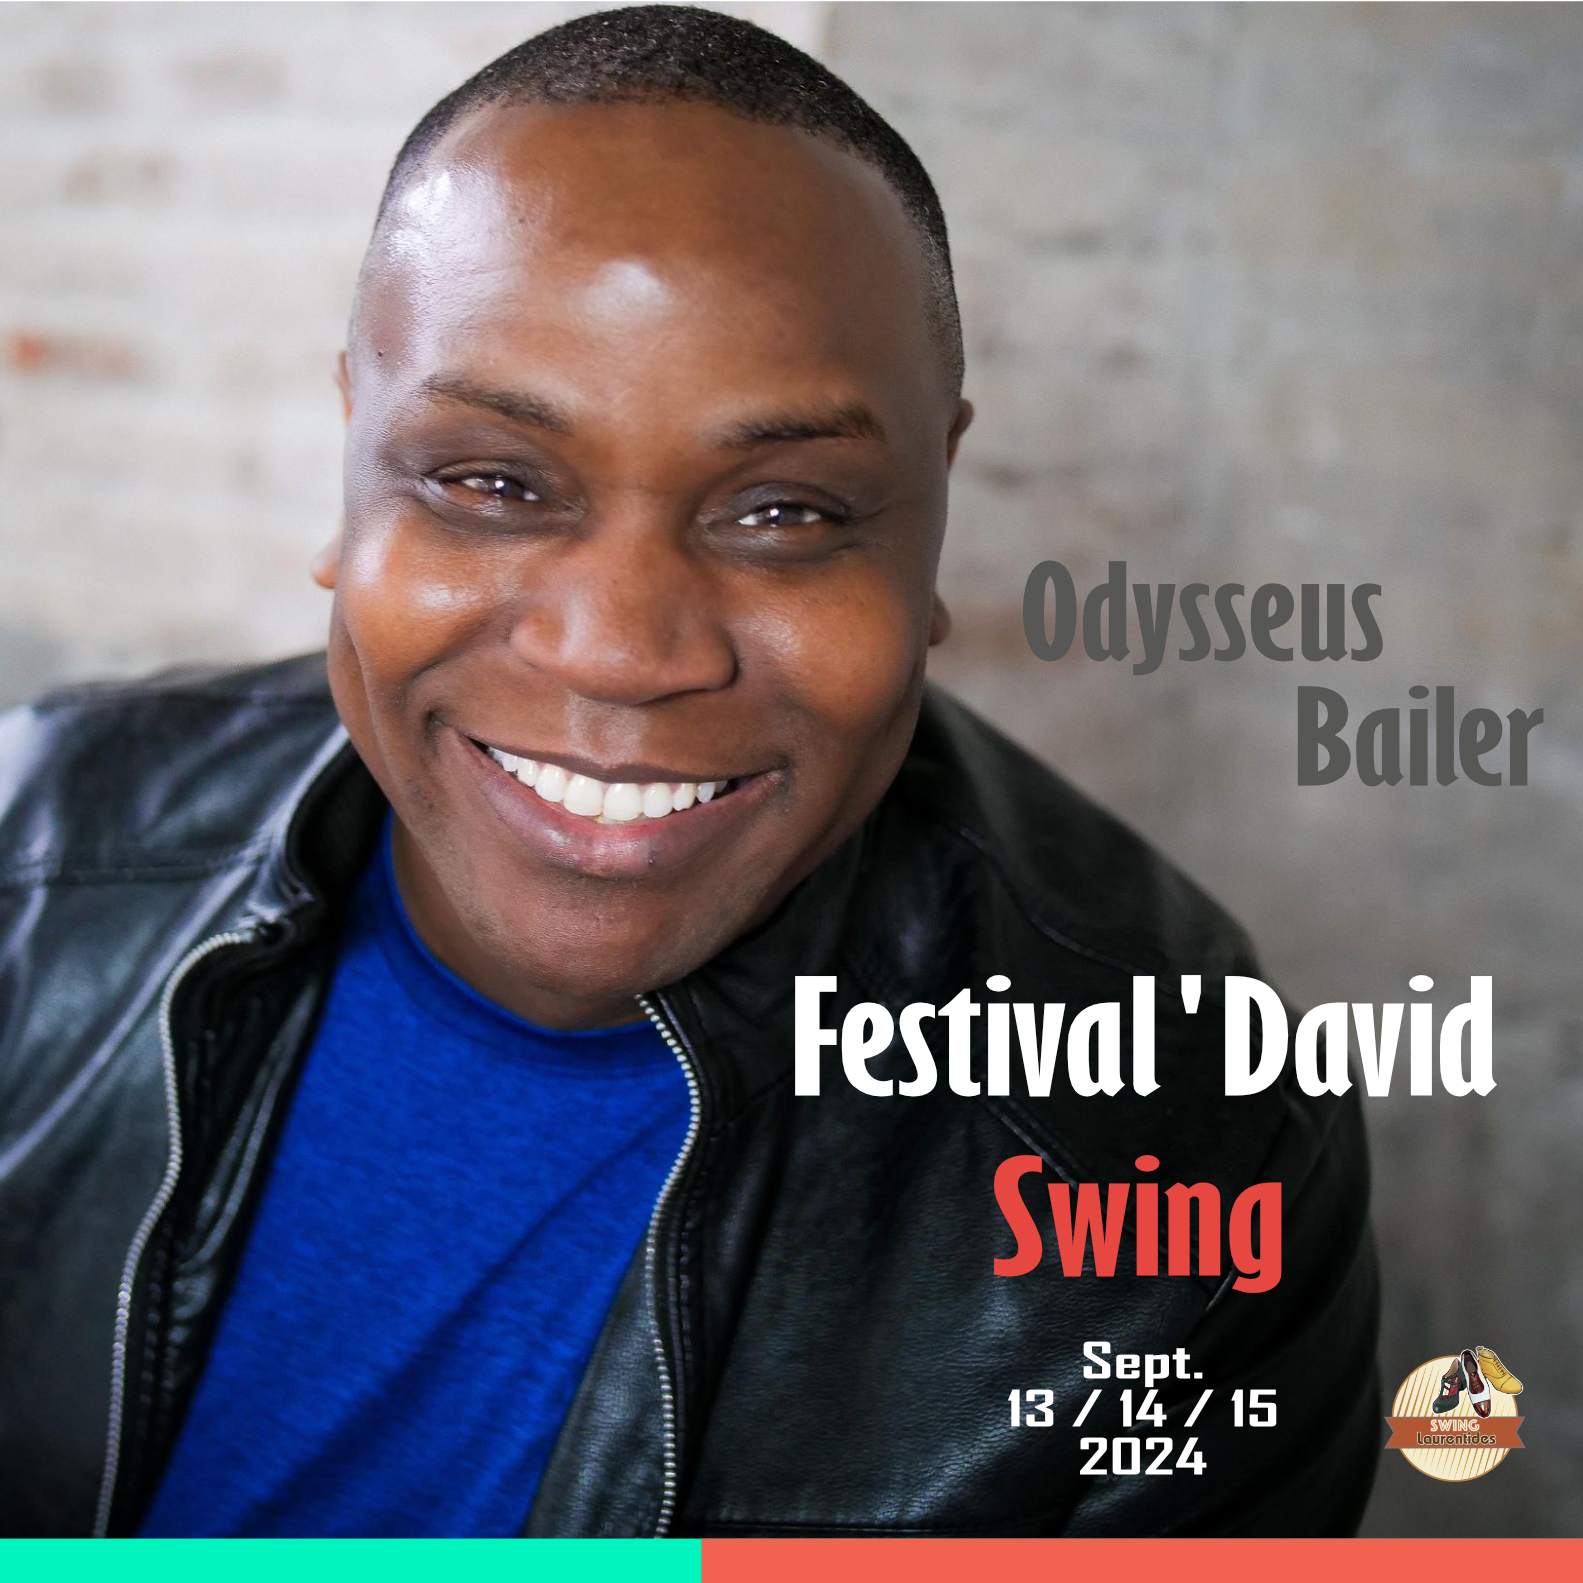 Odysseus_Festival'david Swing